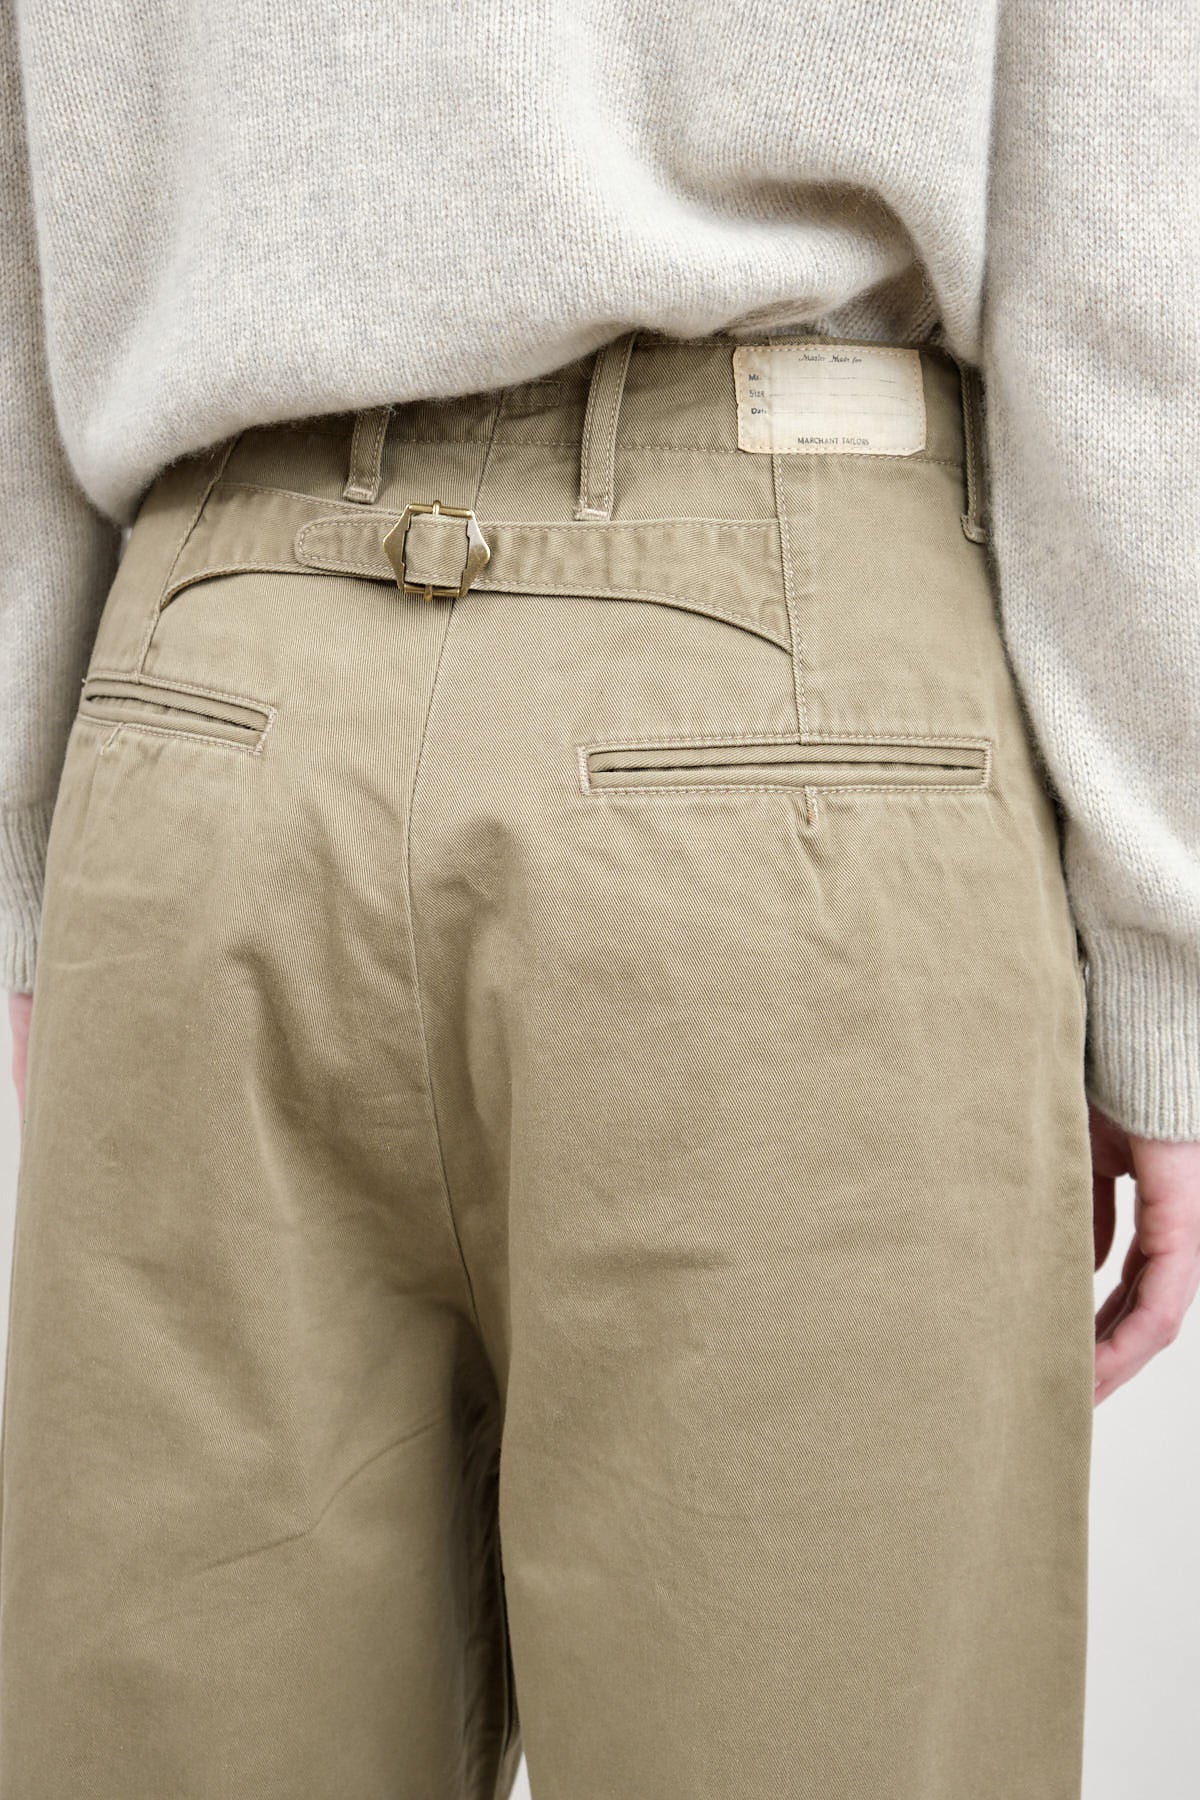 women's pants from Kapital japan